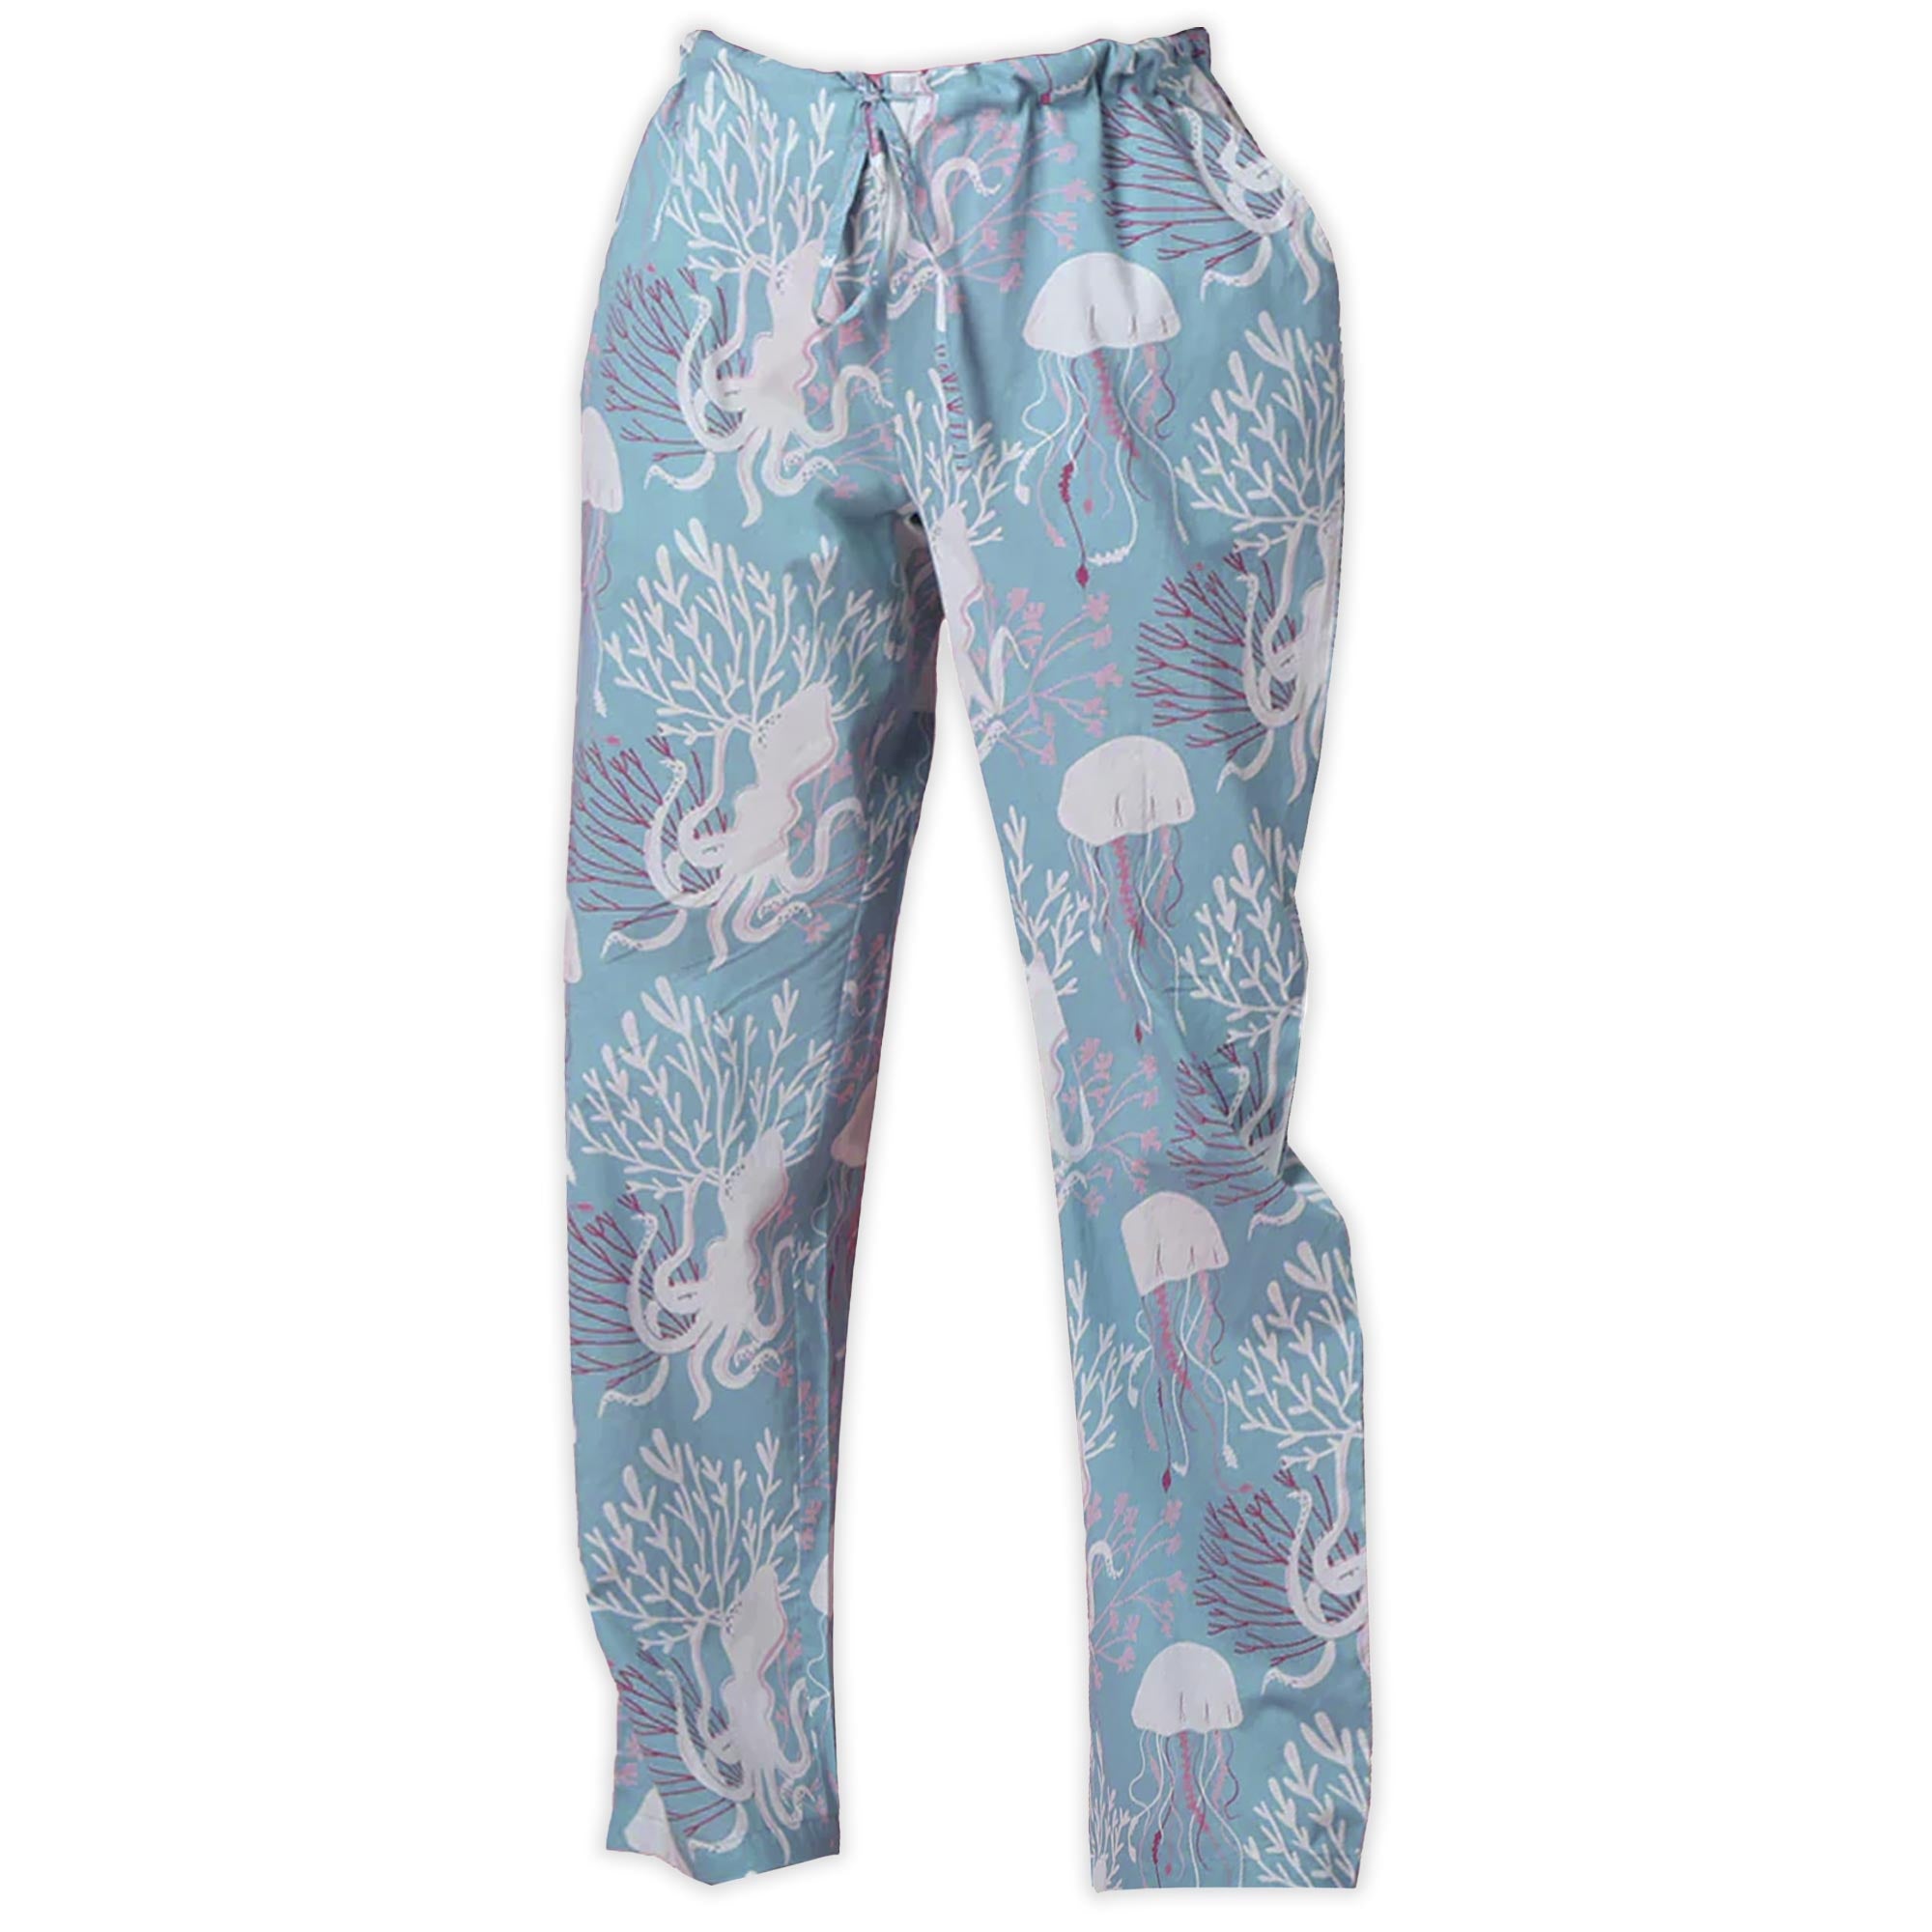 Mahogany Aloha Print Cotton Pajama Pants in a Bag